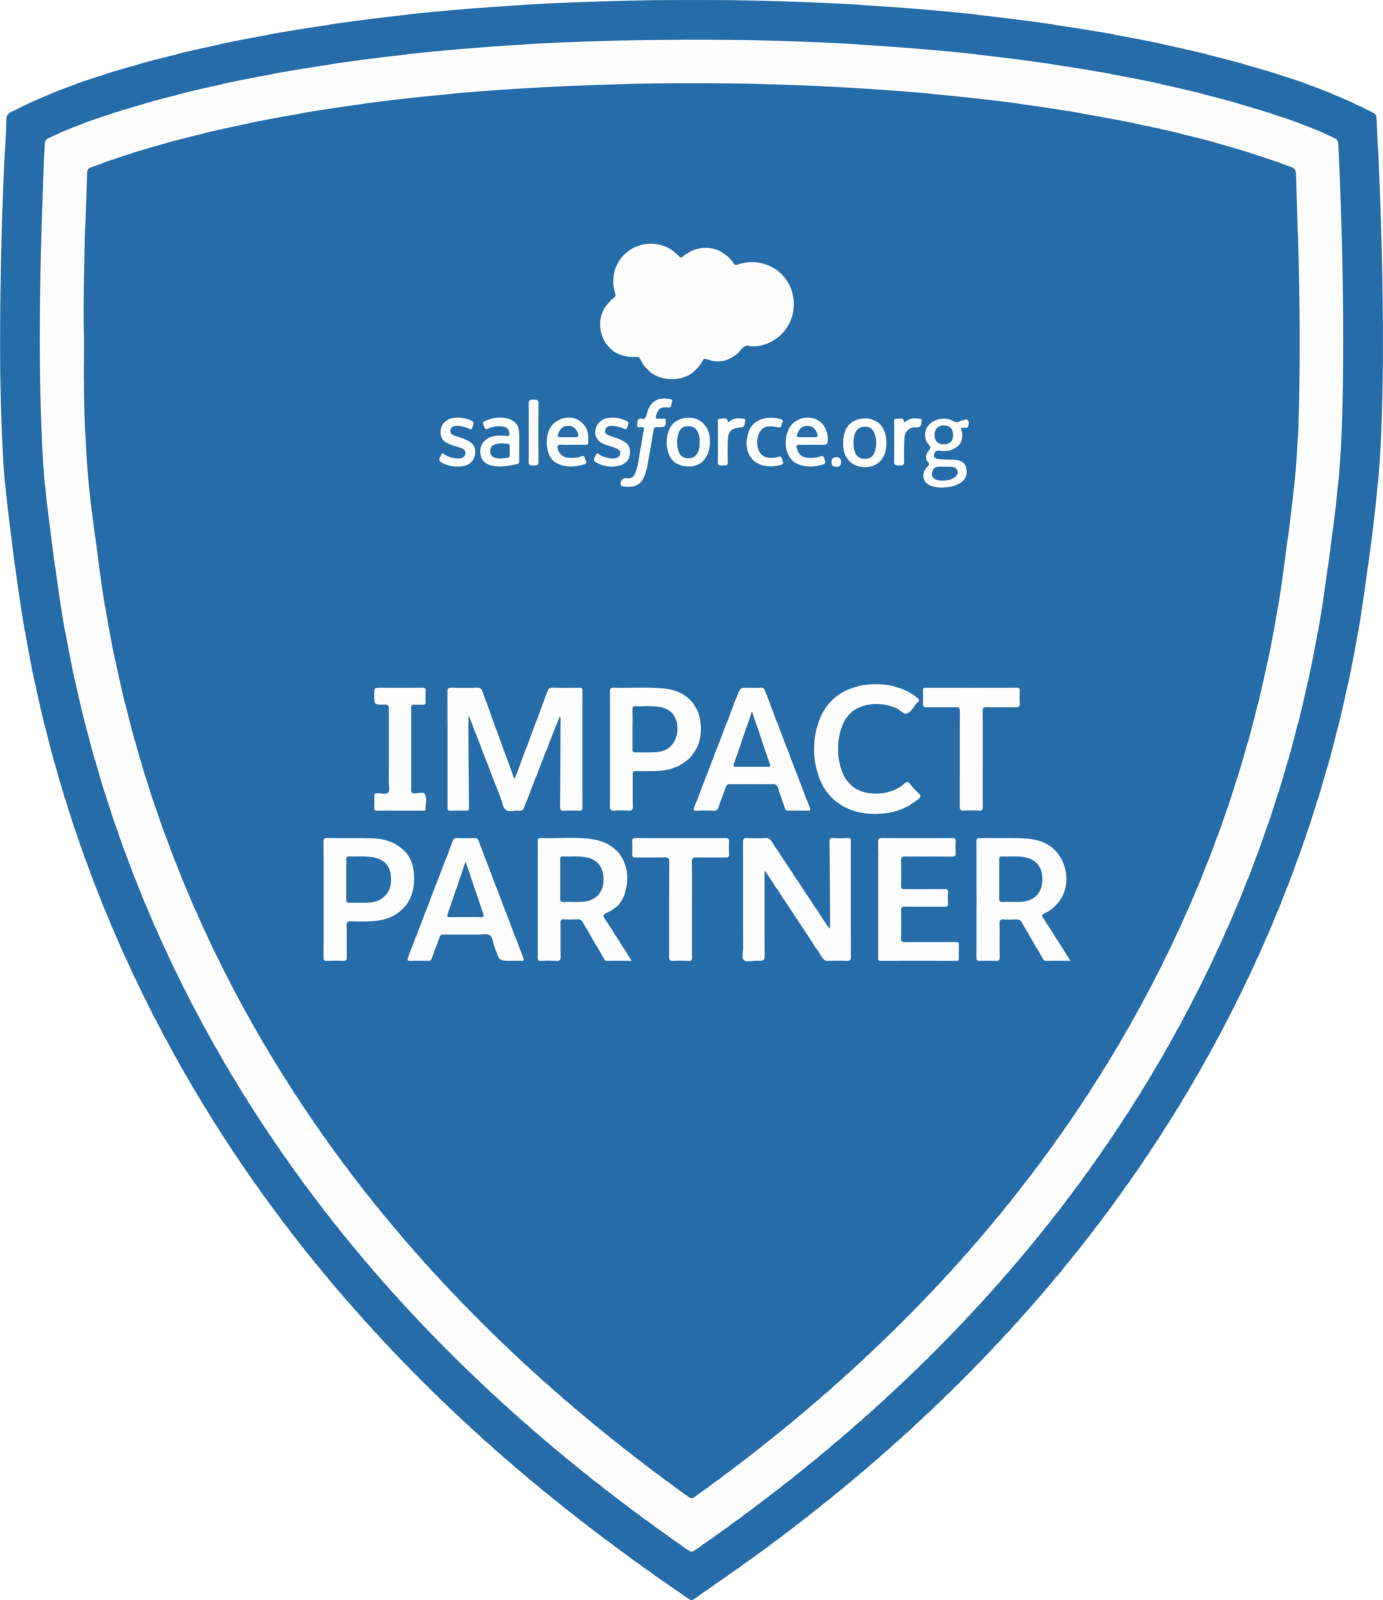 Salesforce impact partner